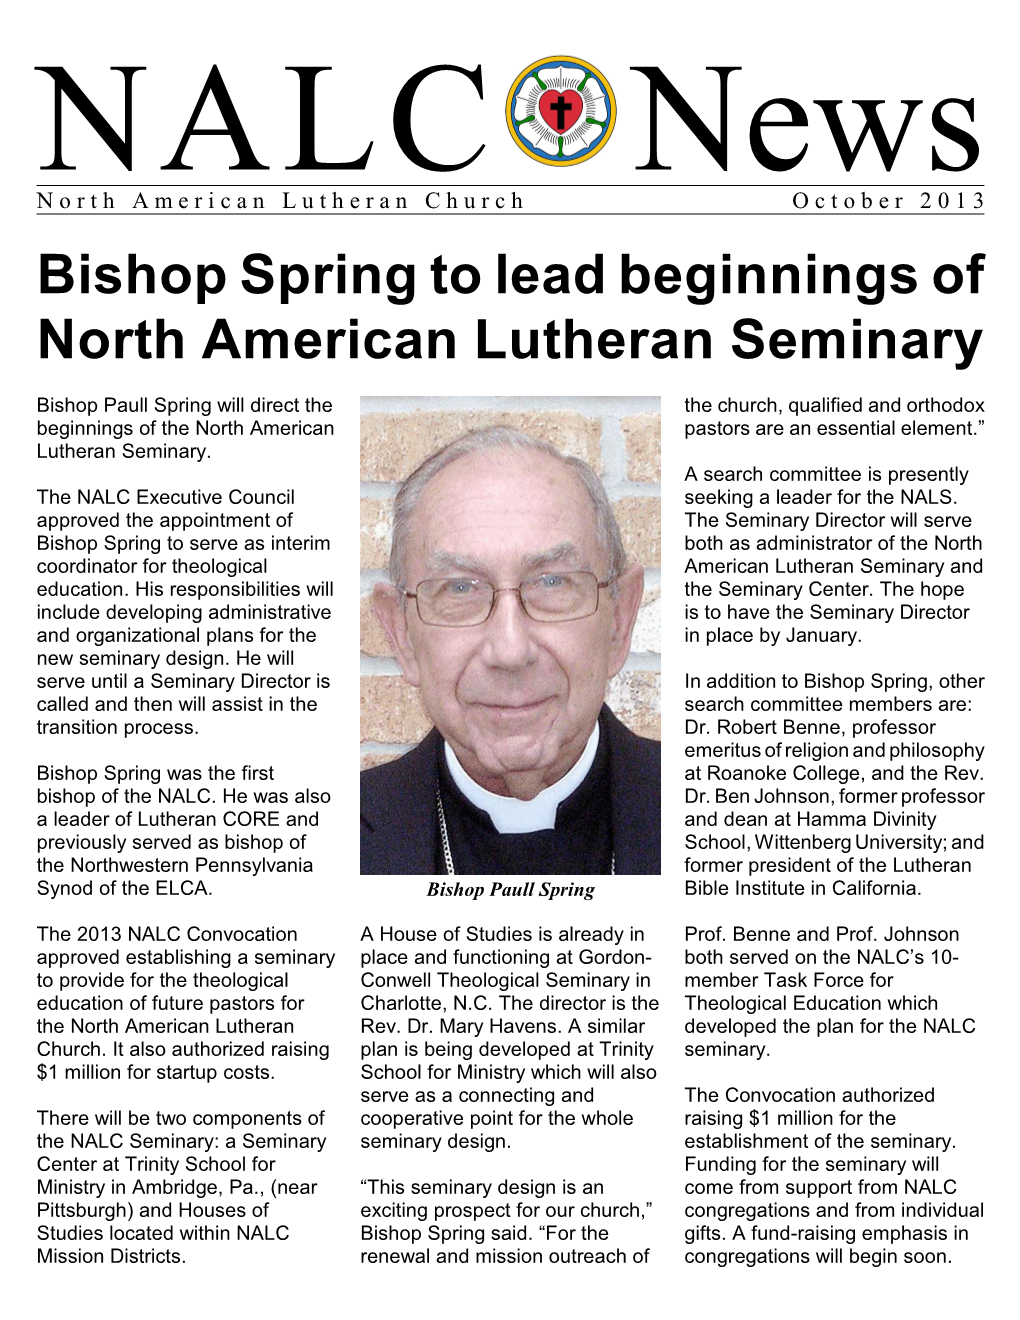 Bishop Spring to Lead Beginnings of North American Lutheran Seminary